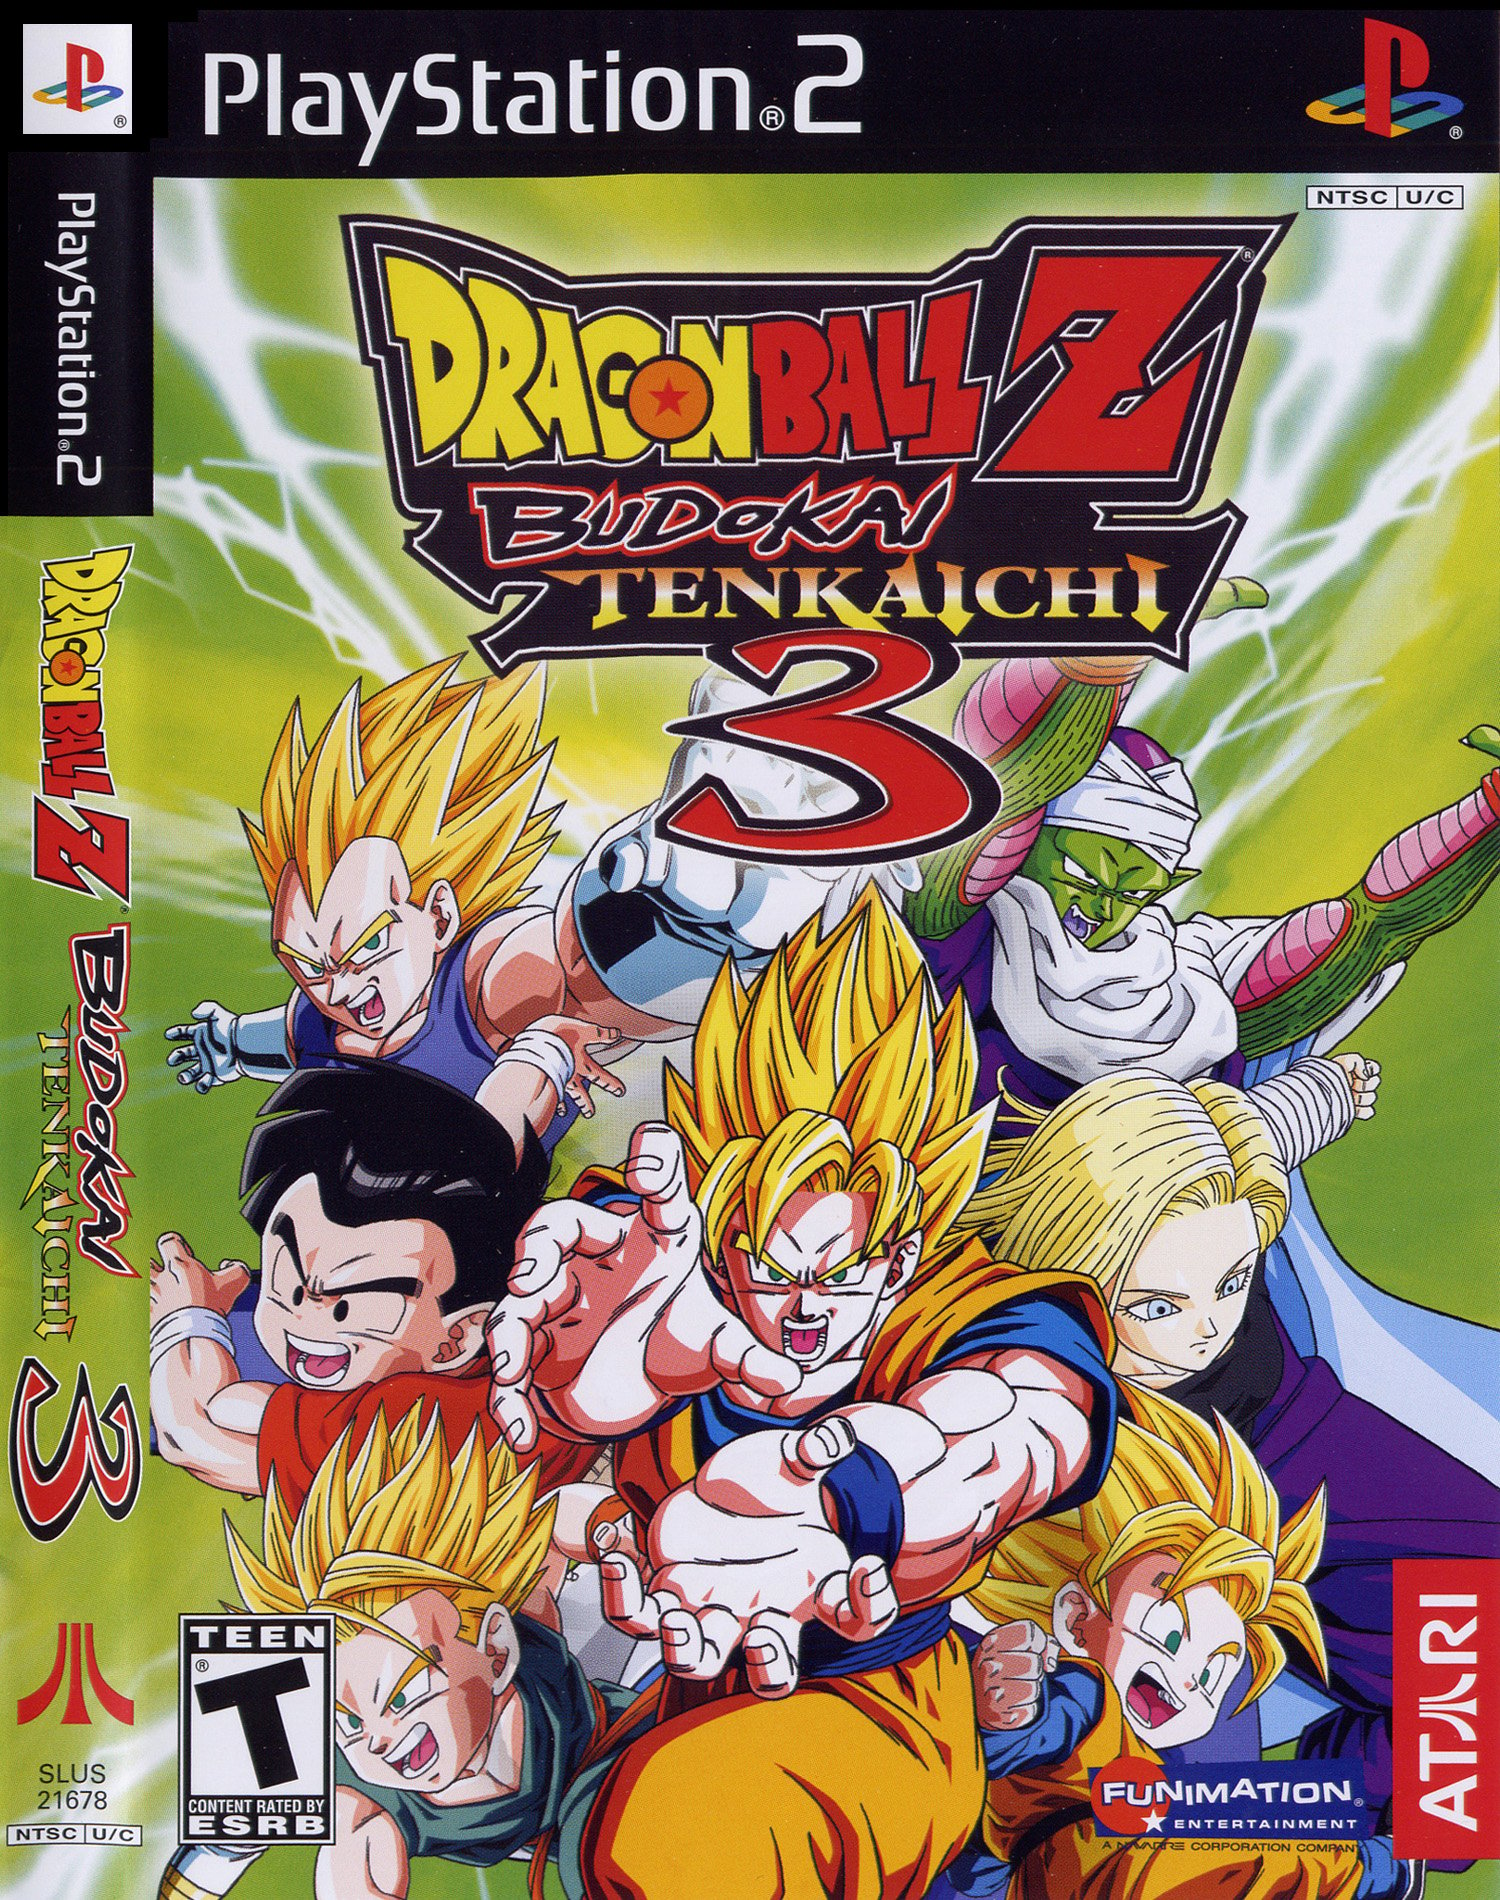 Dragon Ball Z: Budokai Tenkaichi 3 - PCSX2 Wiki